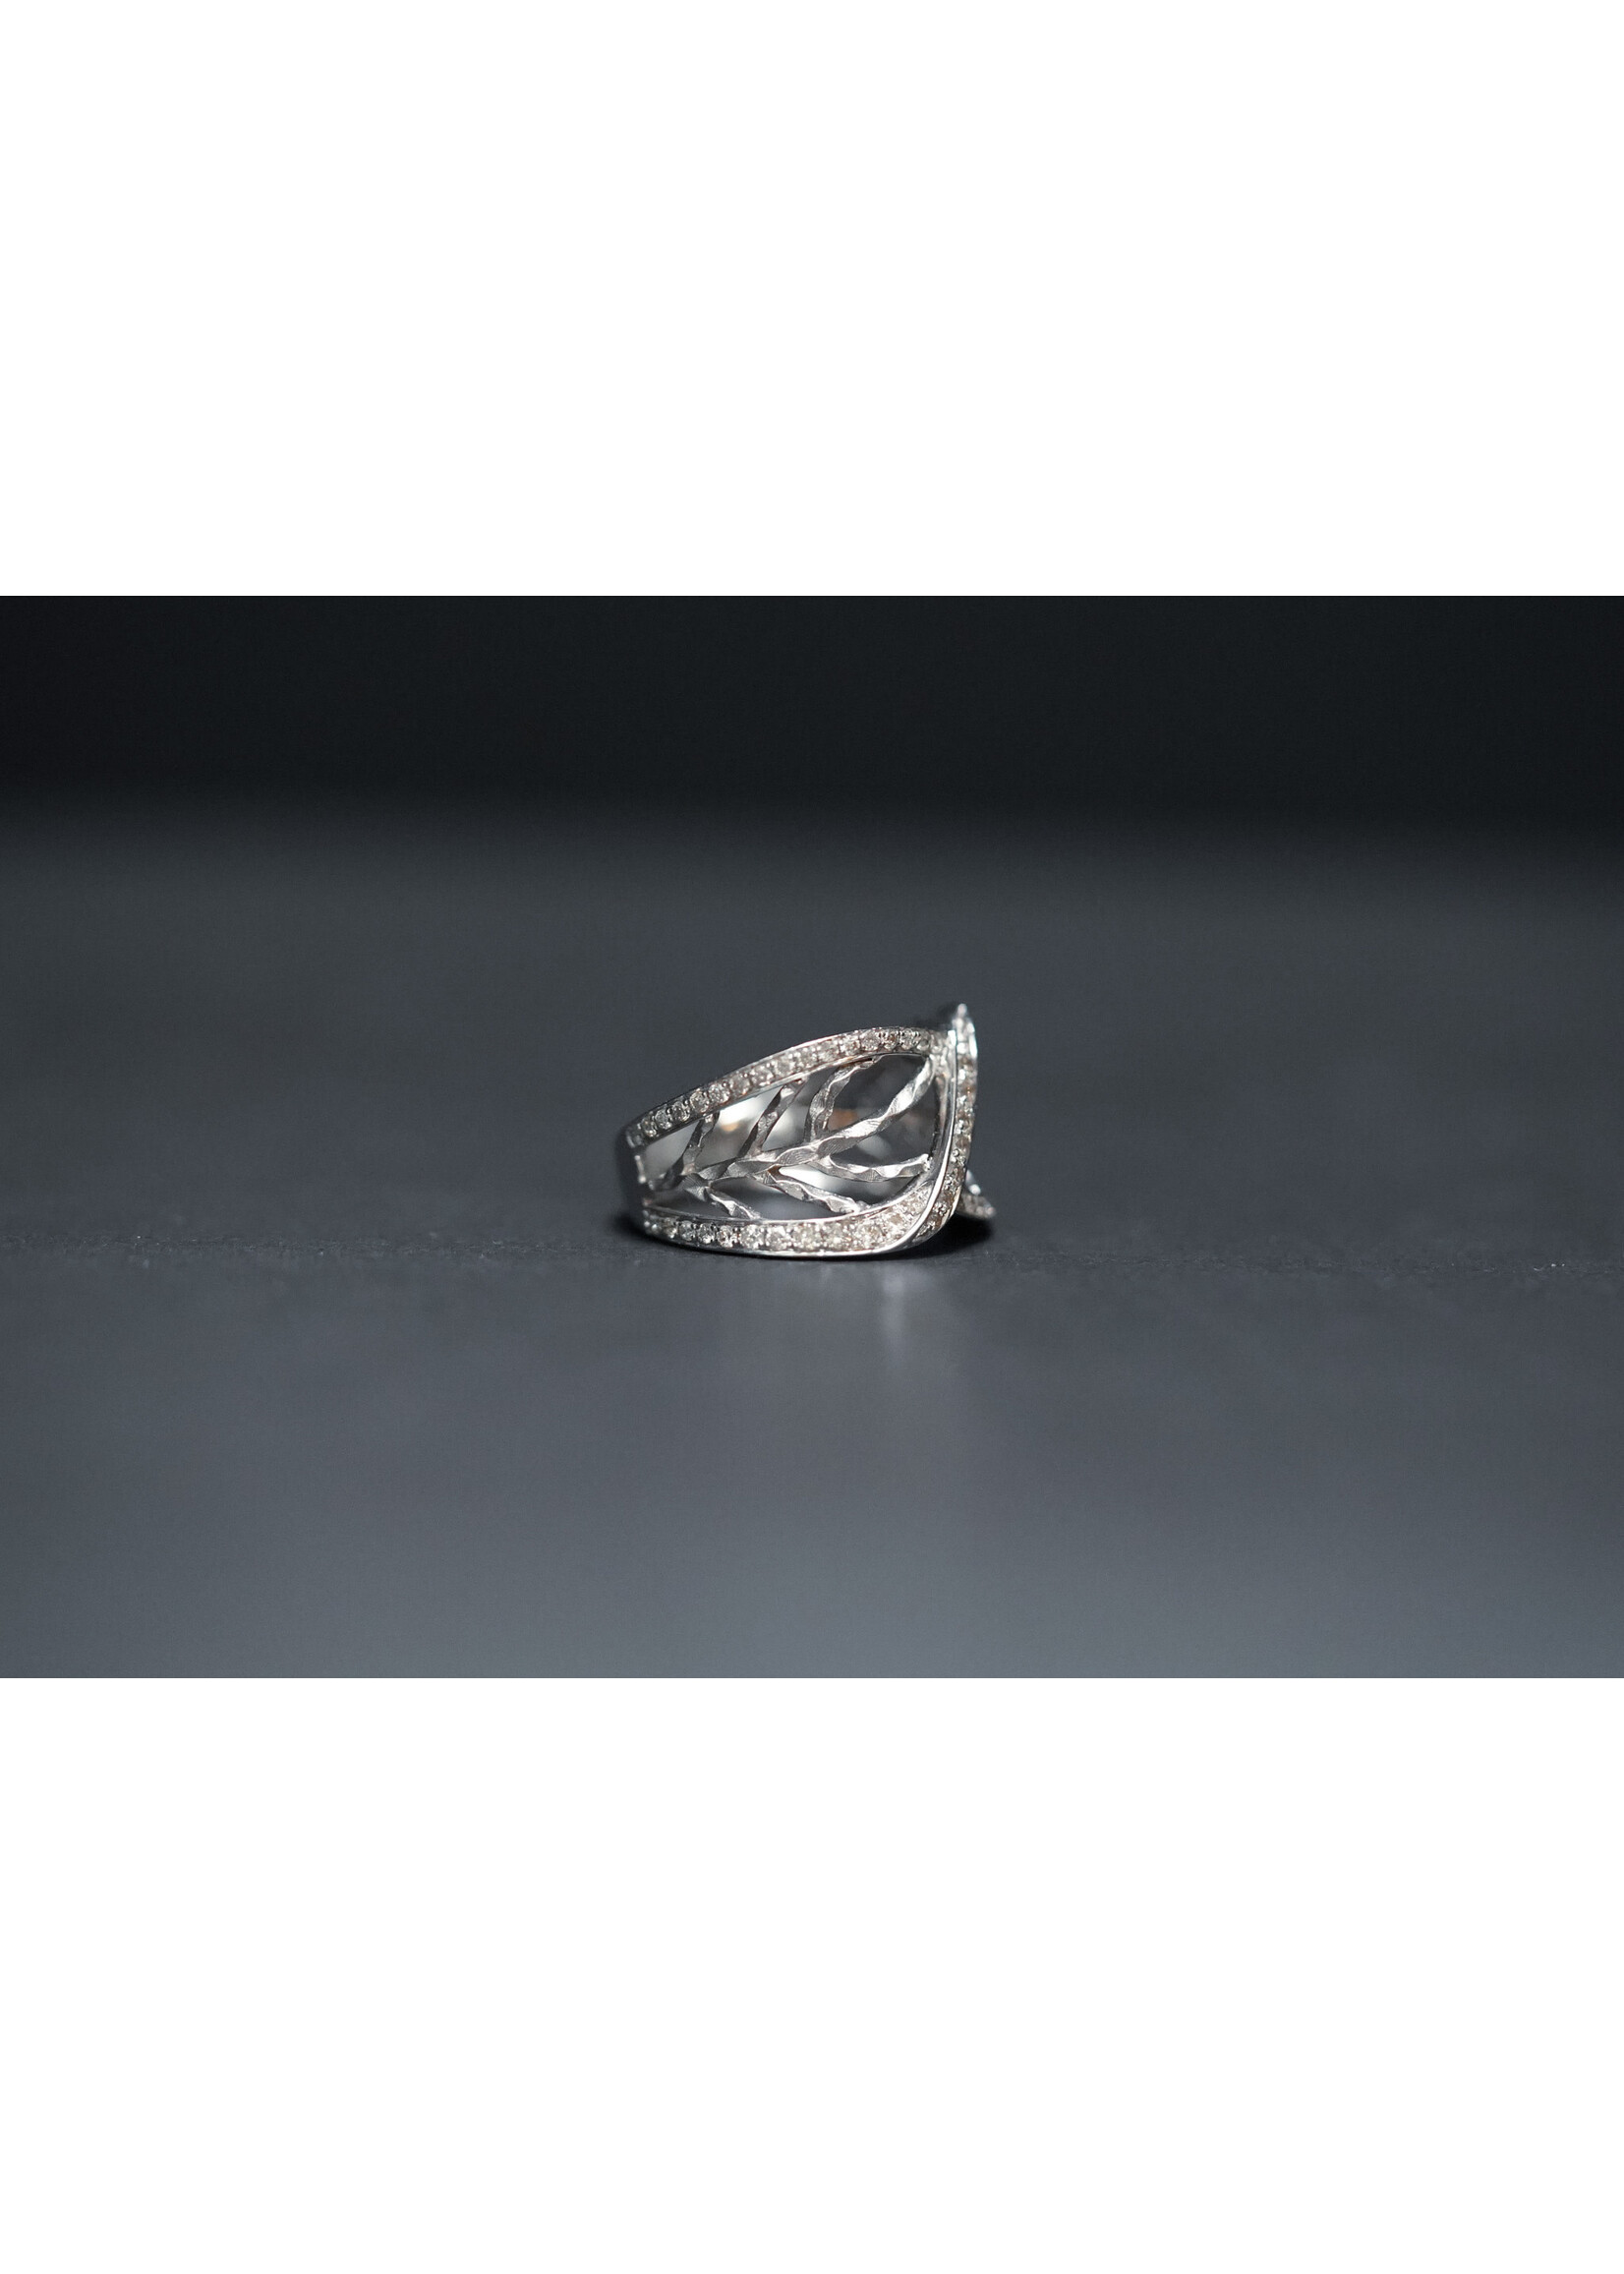 18KW 7.1g .78ctw Diamond Fashion Ring (size 6)